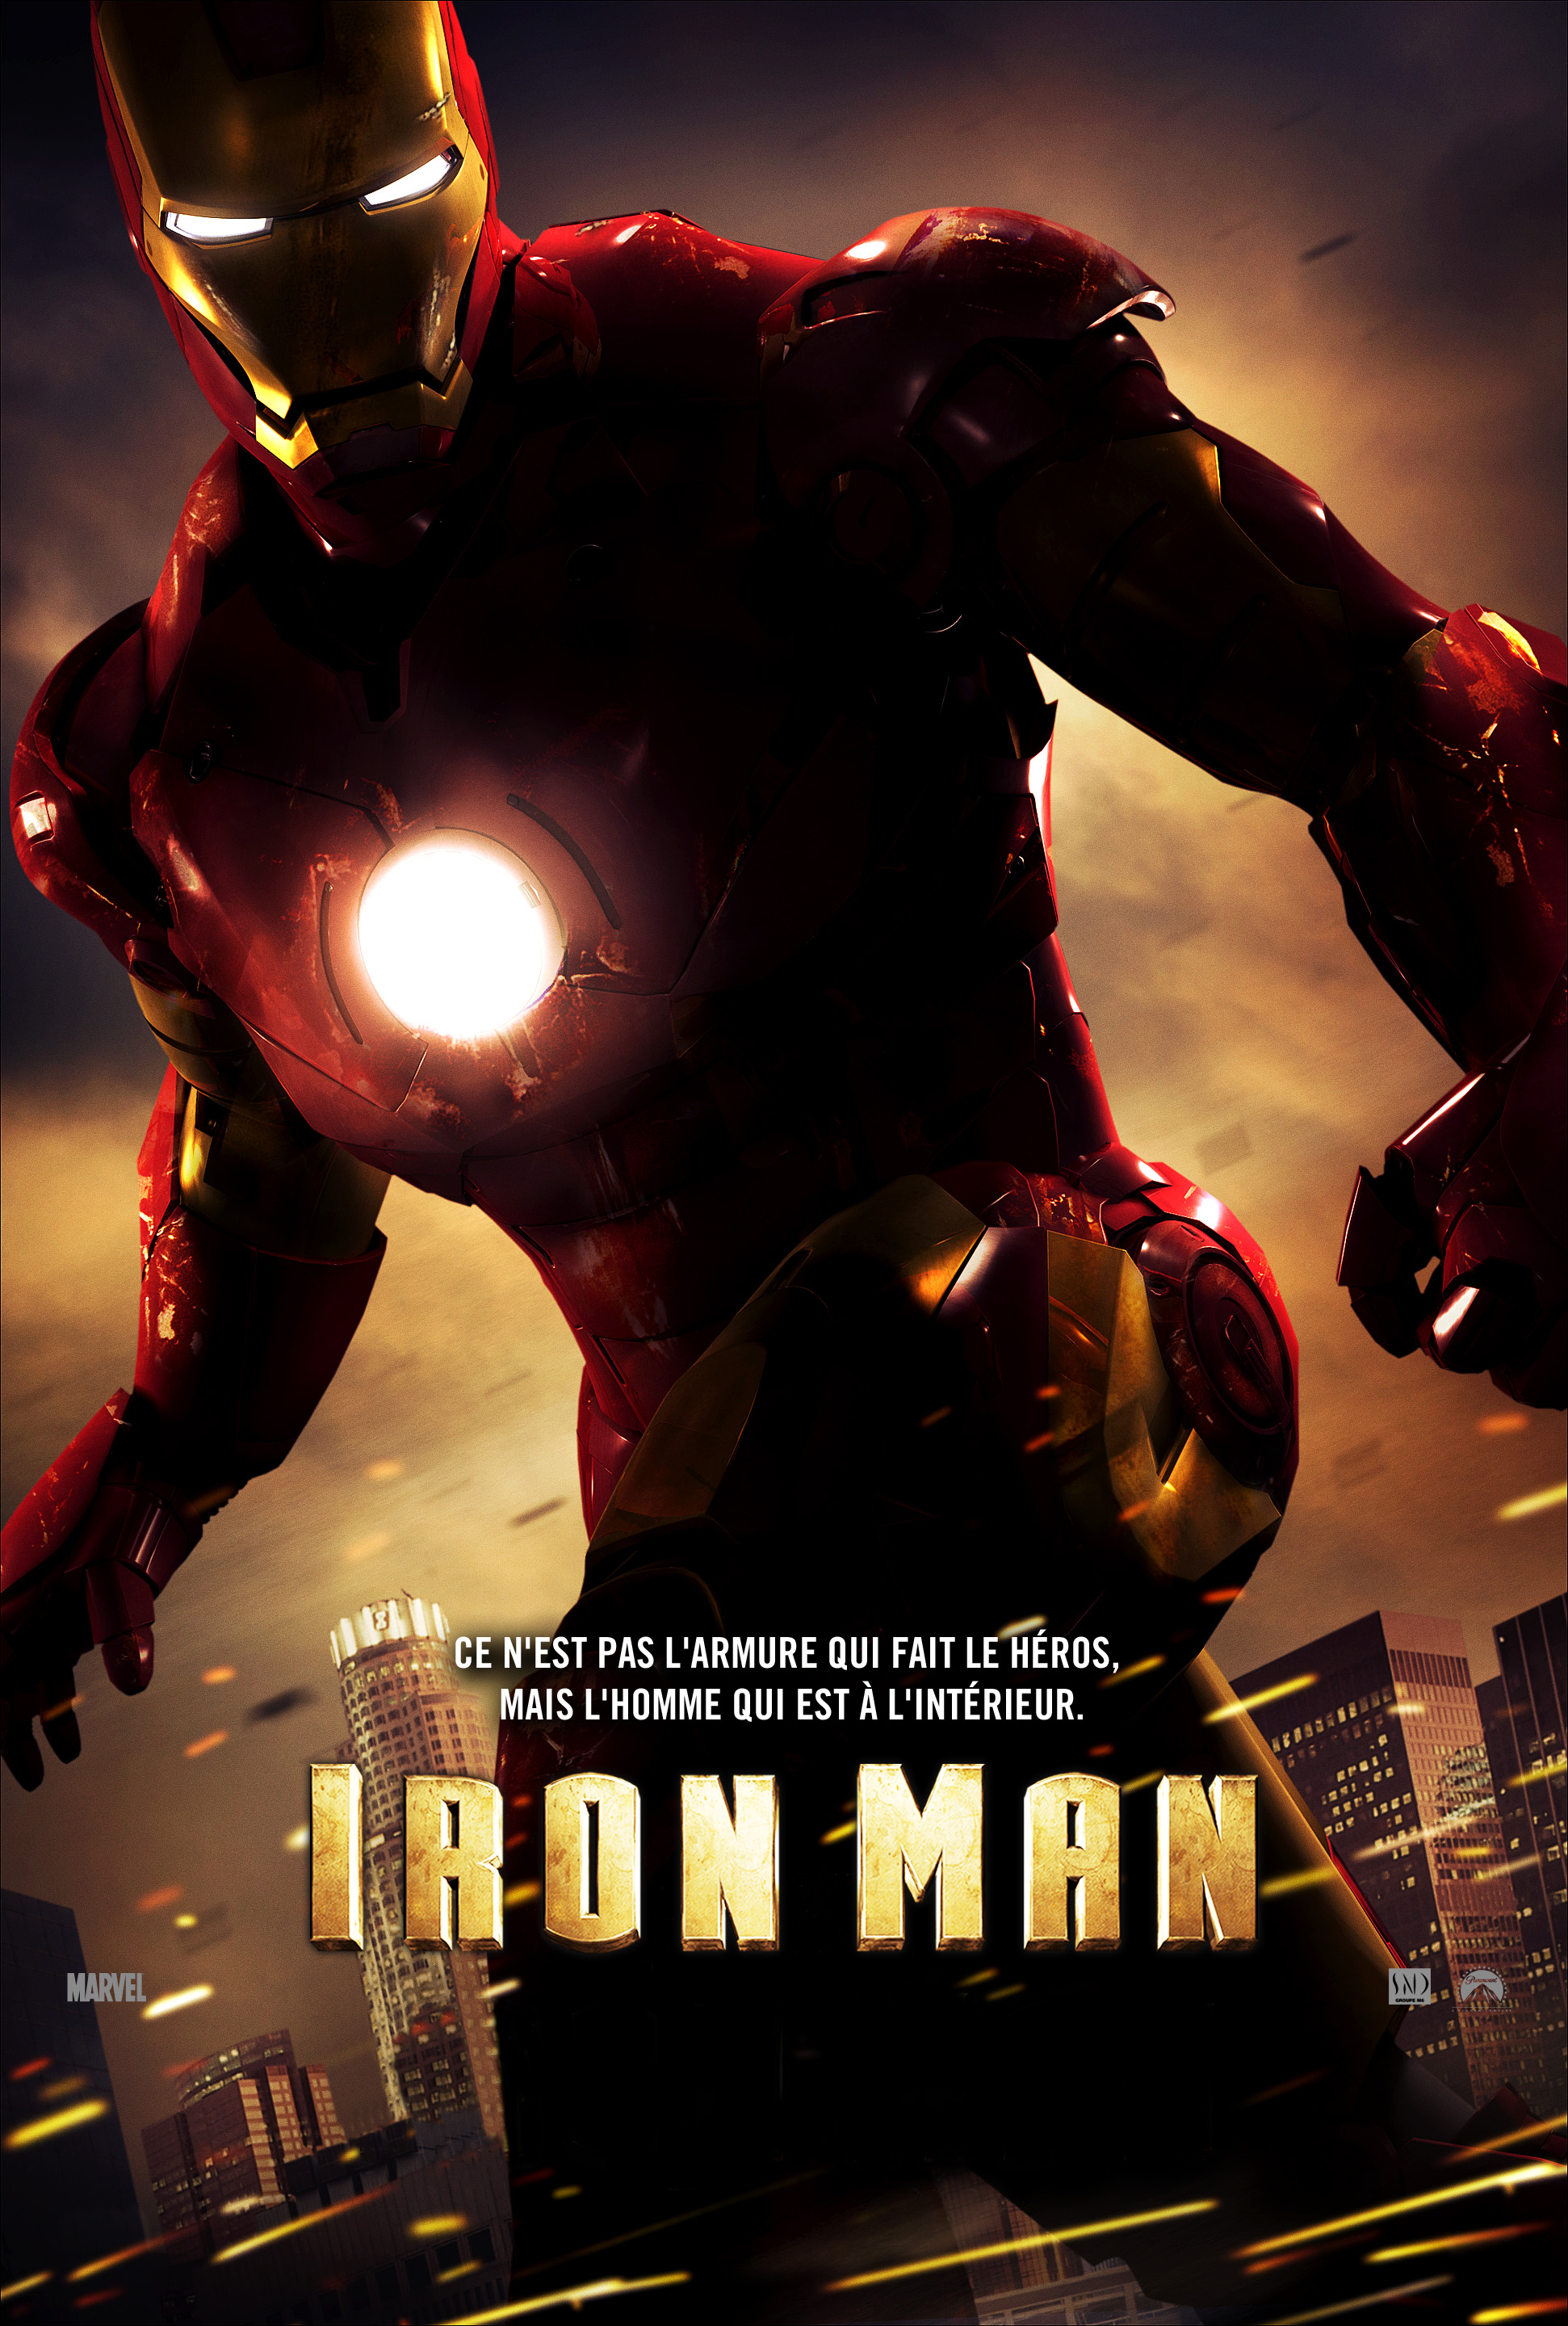 Wallpaper Iron Man Affiche du film Iron Man